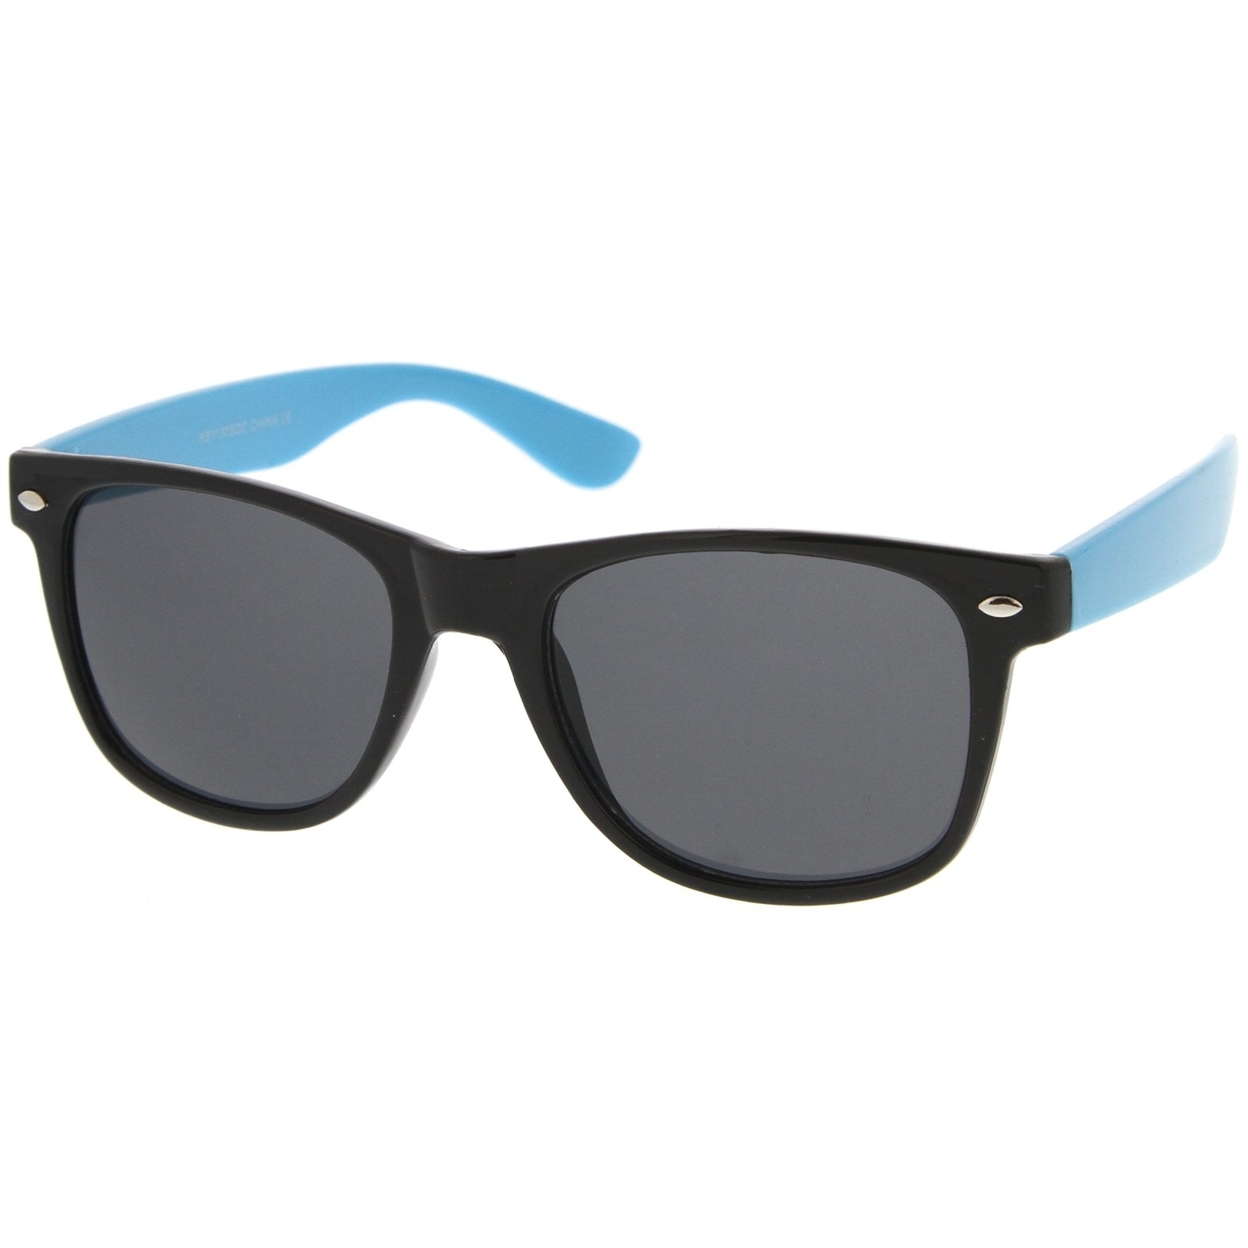 Classic Retro Two-Toned Neon Color Temple Horn Rimmed Sunglasses 54mm - Shiny Black-Blue / Smoke